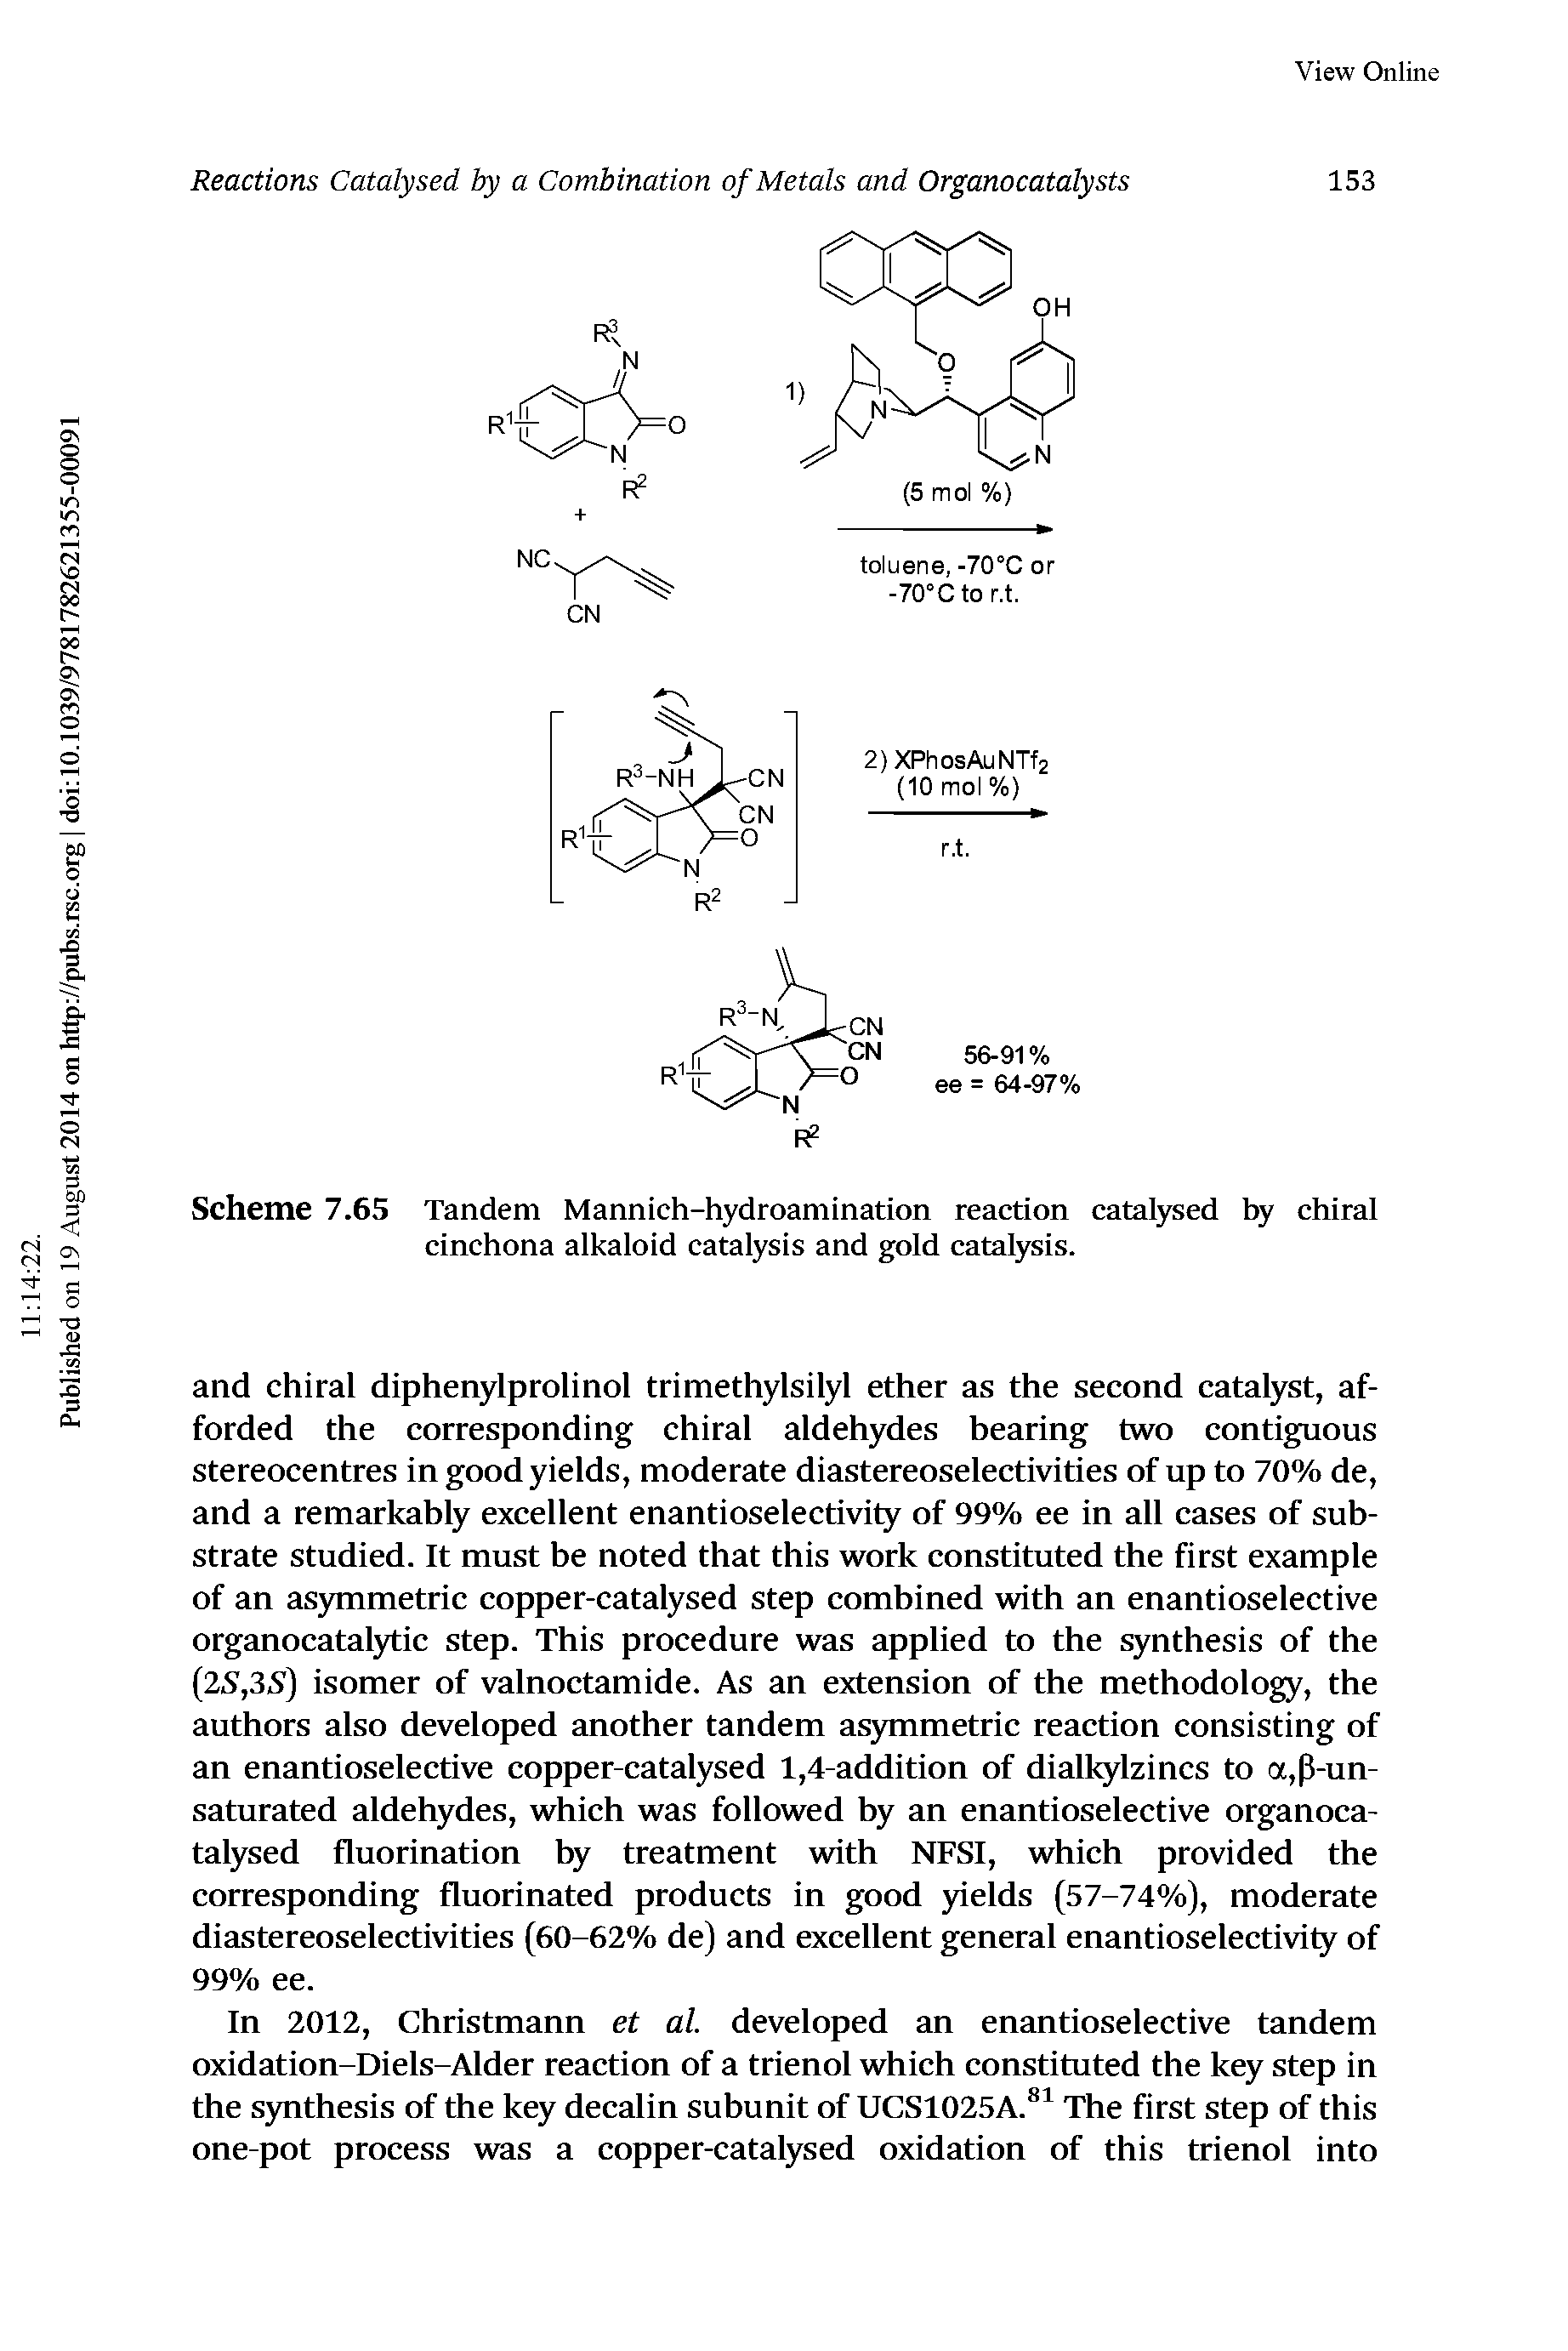 Scheme 7.65 Tandem Mannich-hydroamination reaction catalysed 1 chiral cinchona alkaloid catalysis and gold catalysis.